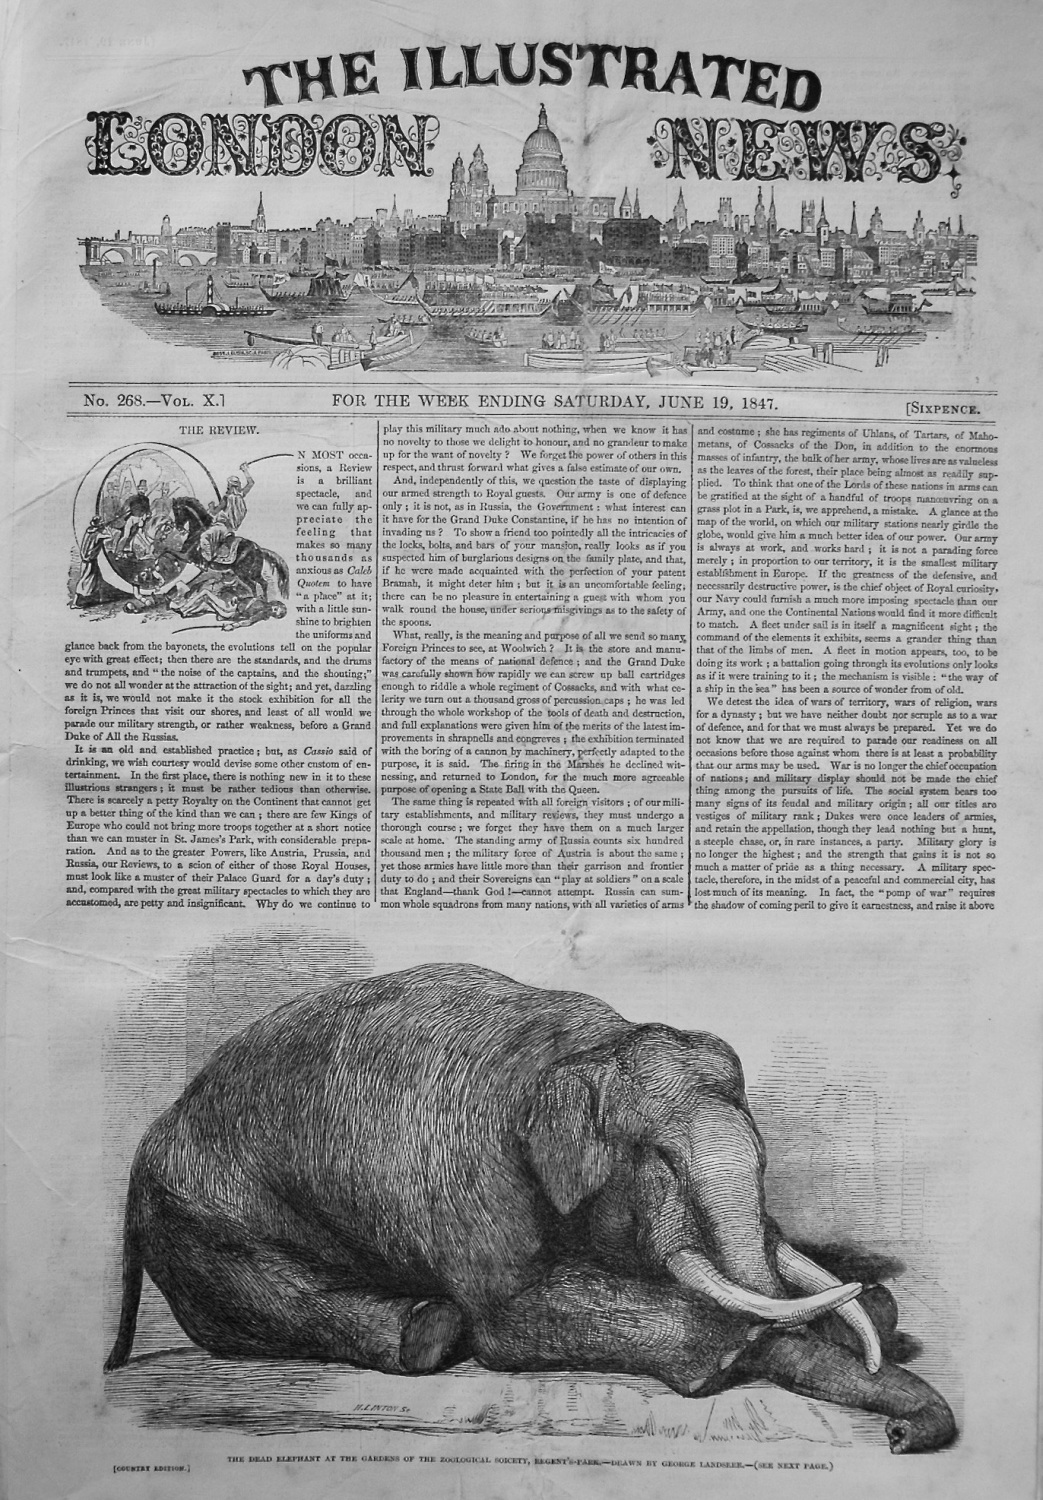 Illustrated London News. June 19th, 1847.